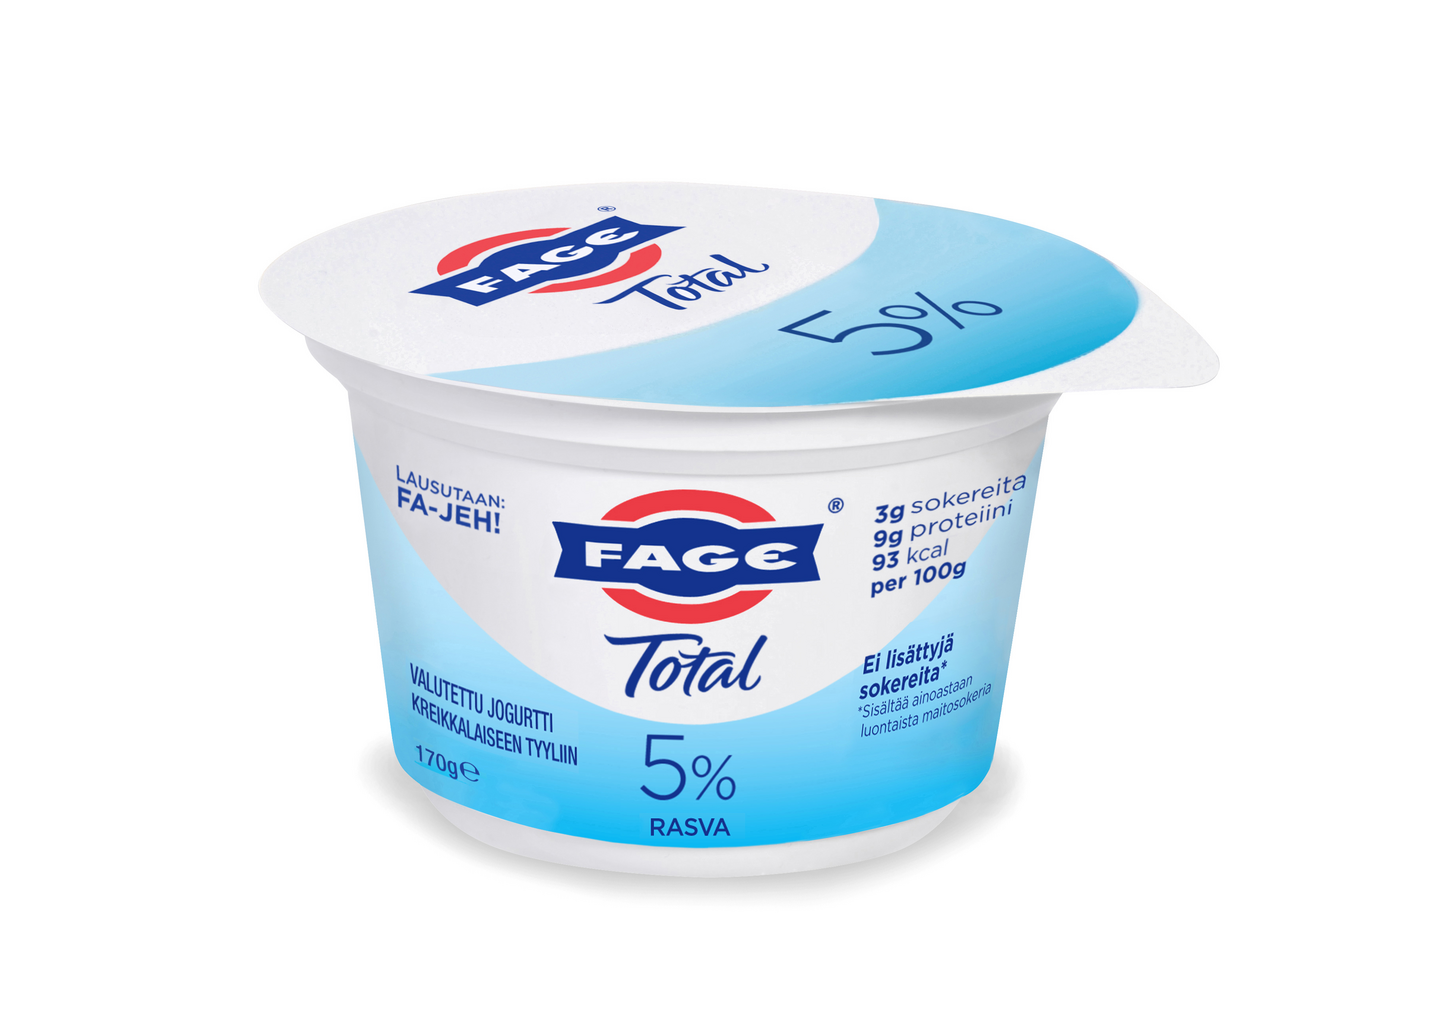 Fage Total jogurtti 170g